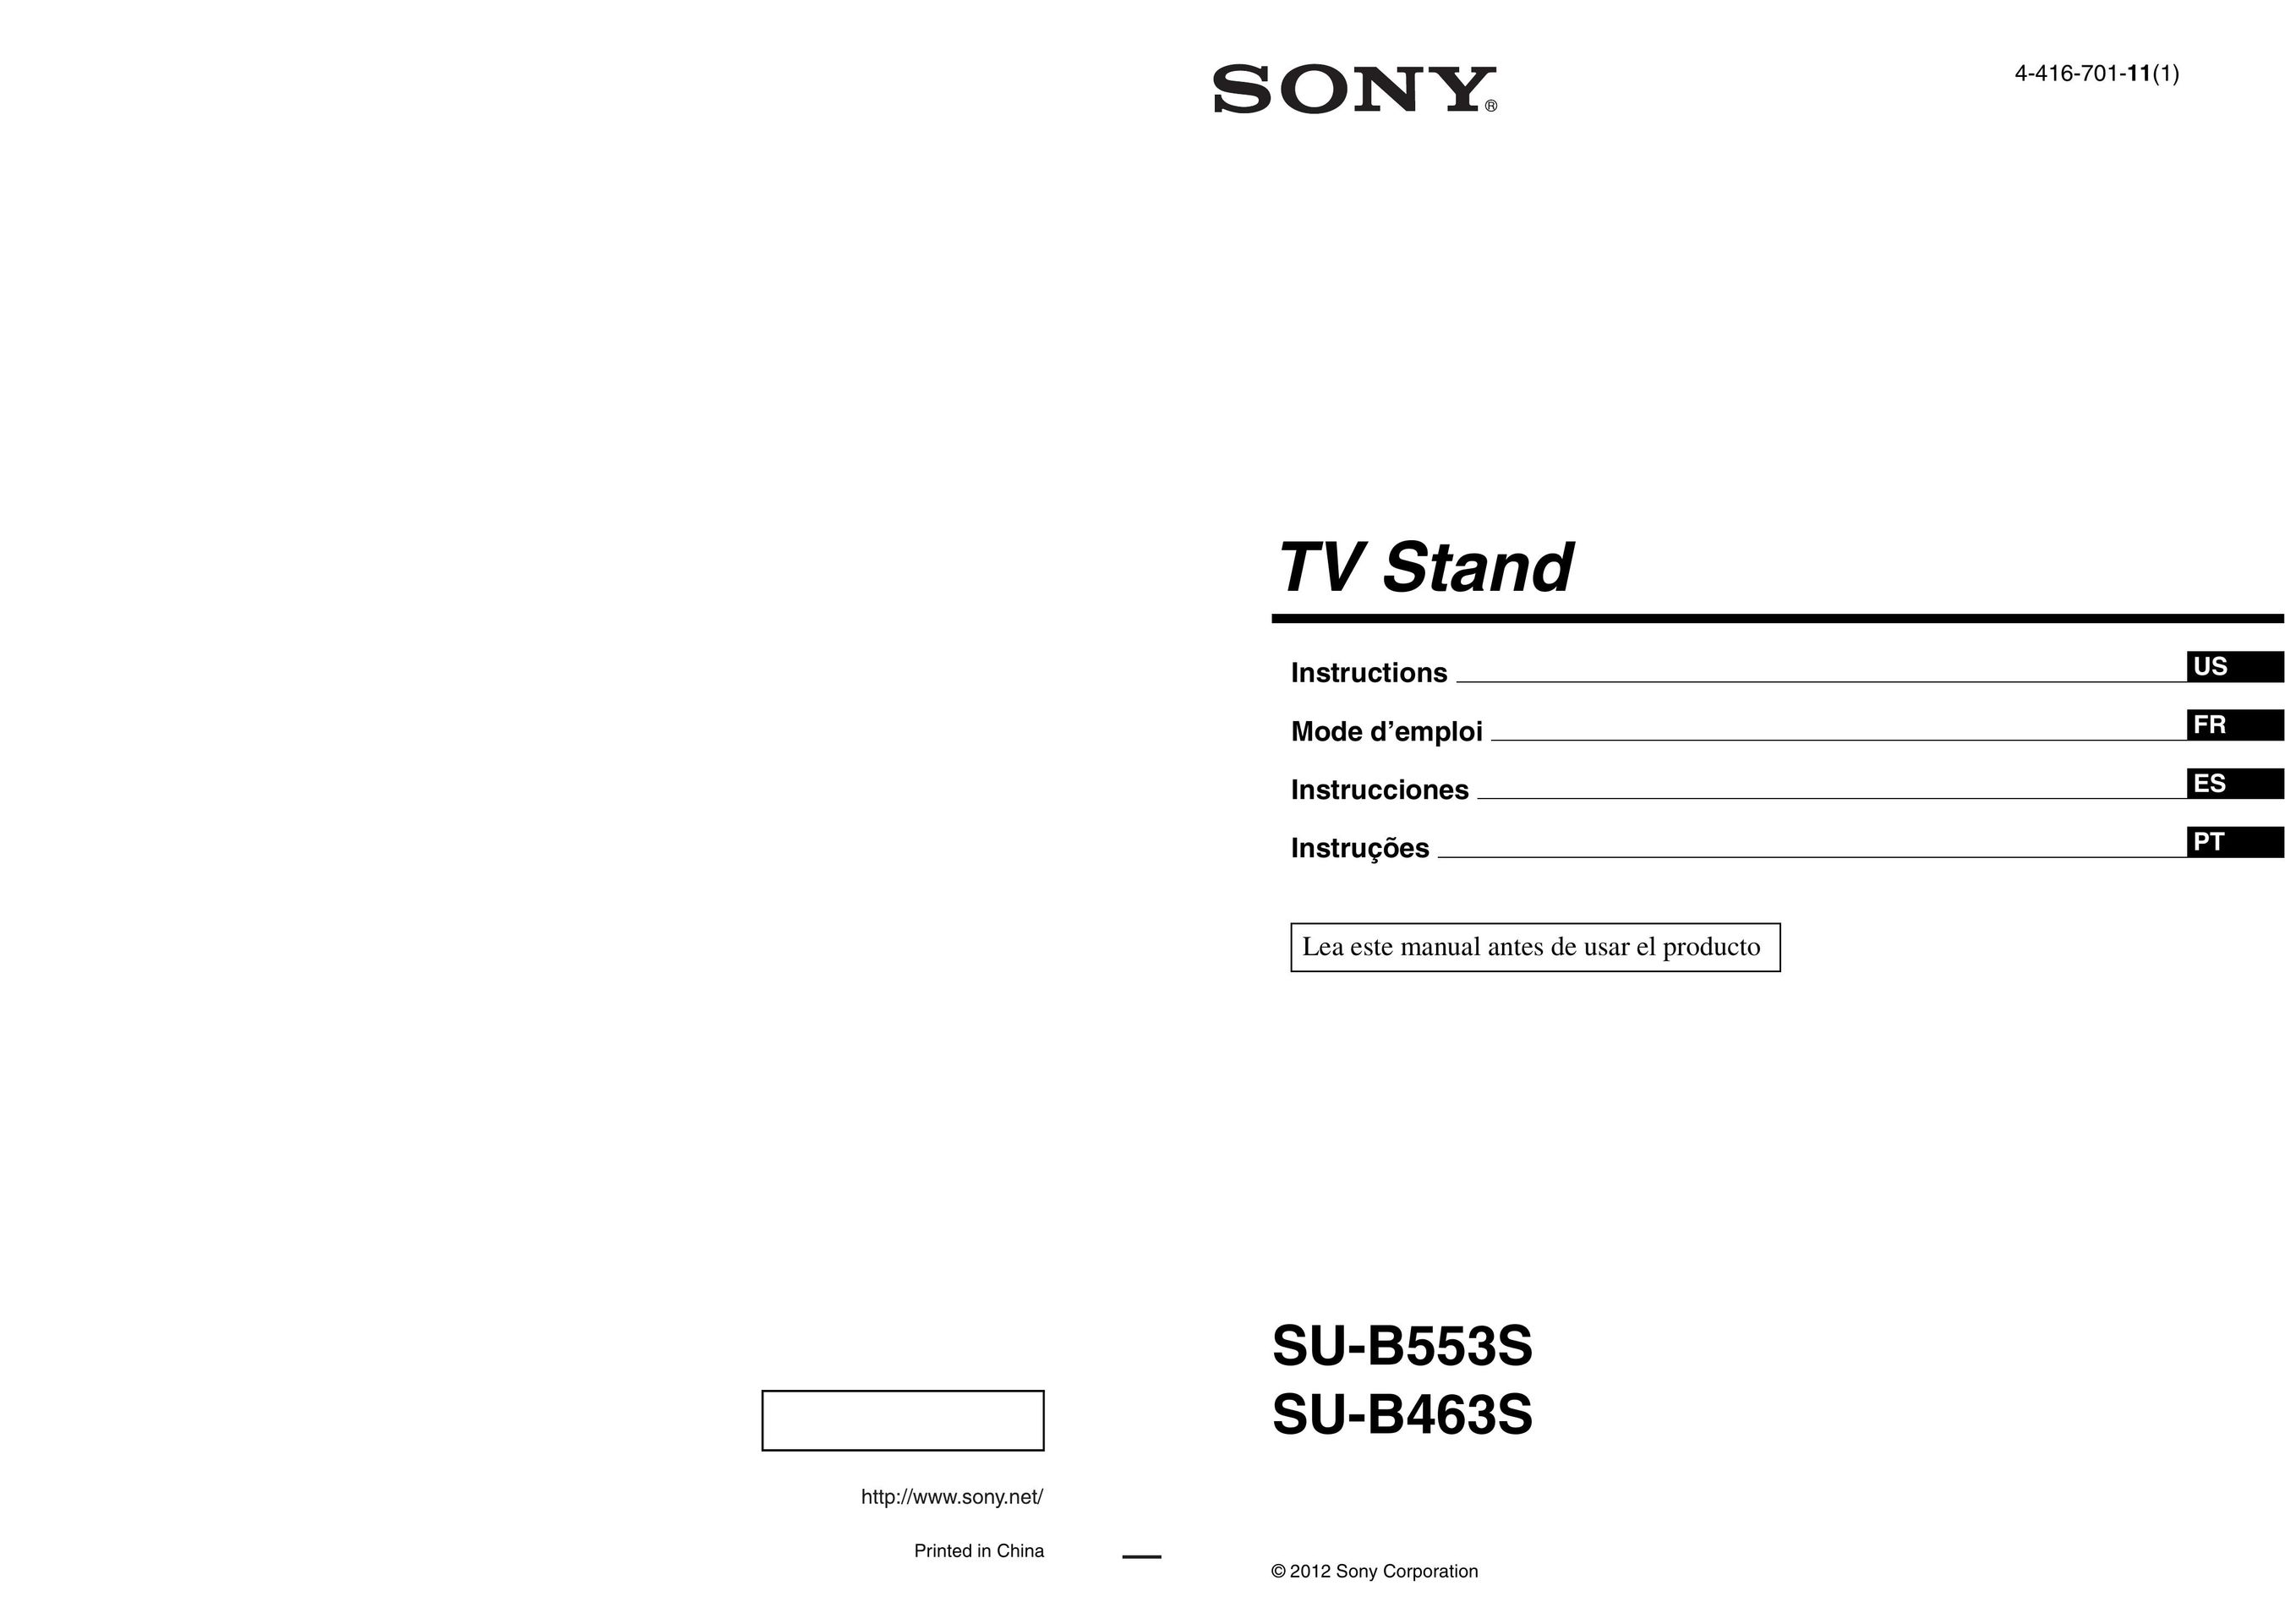 Sony SUB463S Indoor Furnishings User Manual